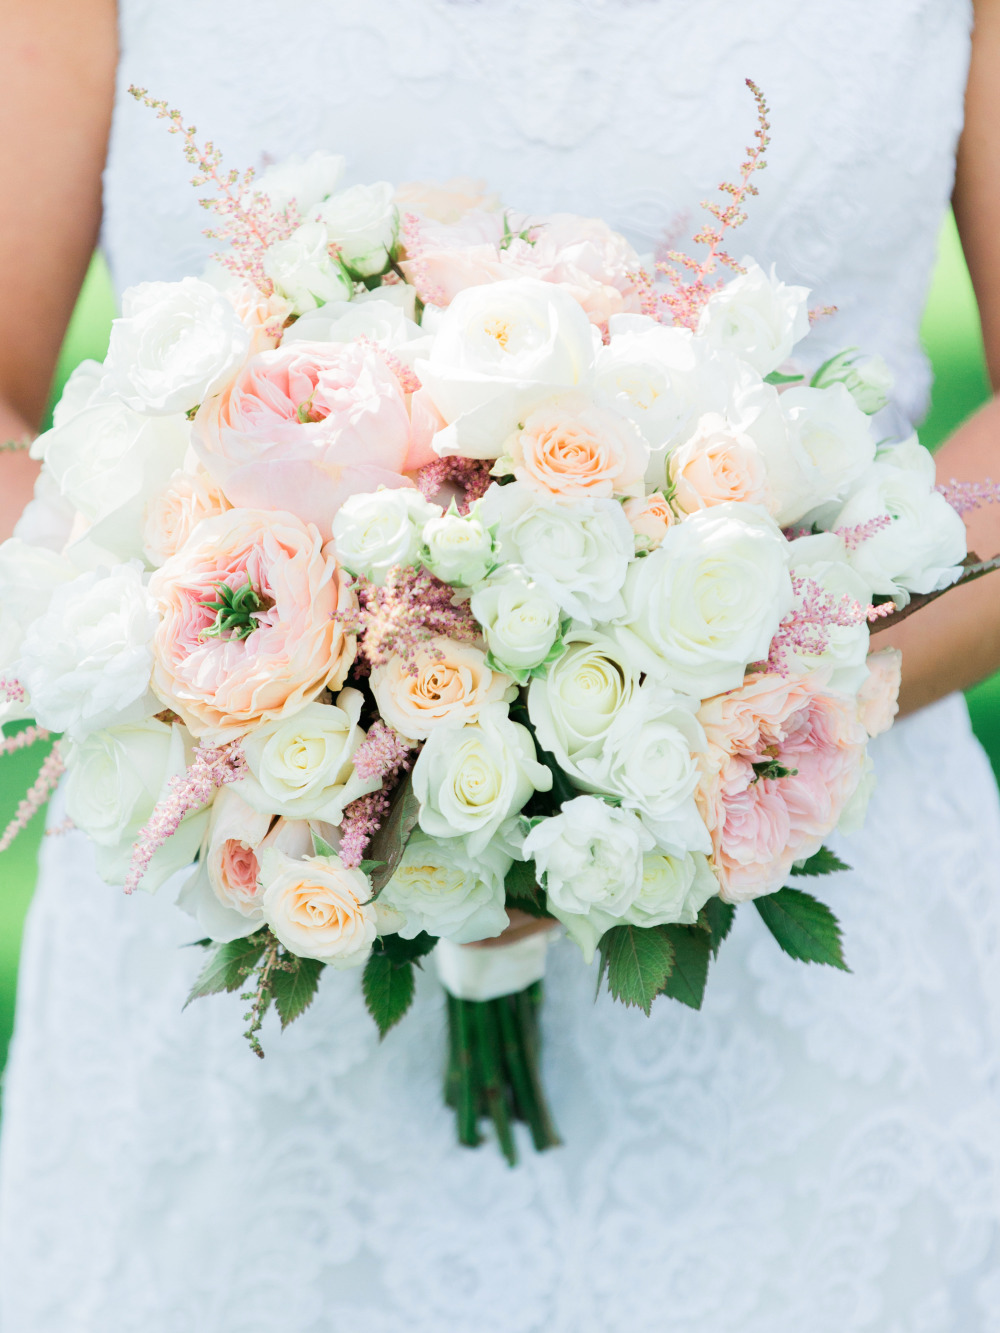 stunning pink and white wedding bride bouquet